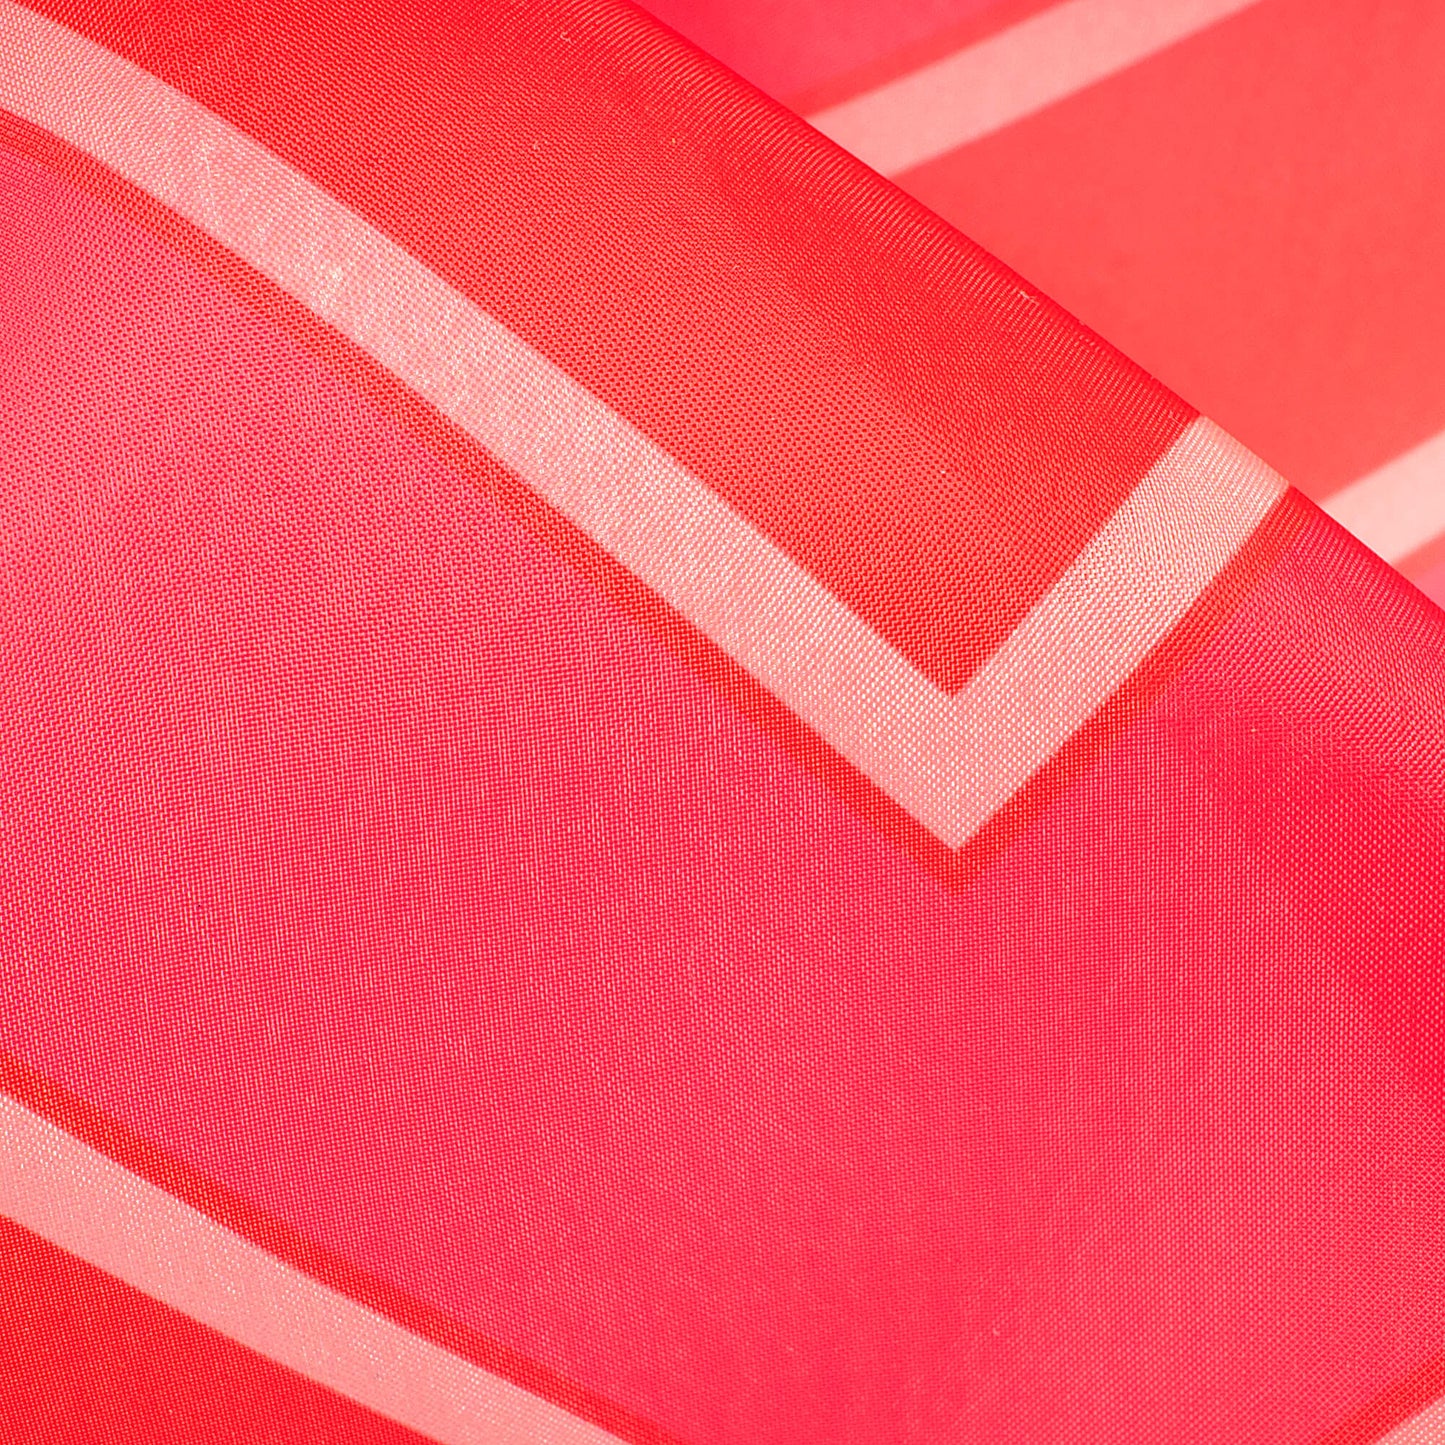 Cerise Pink And White Chevron Pattern Digital Print Organza Satin Fabric